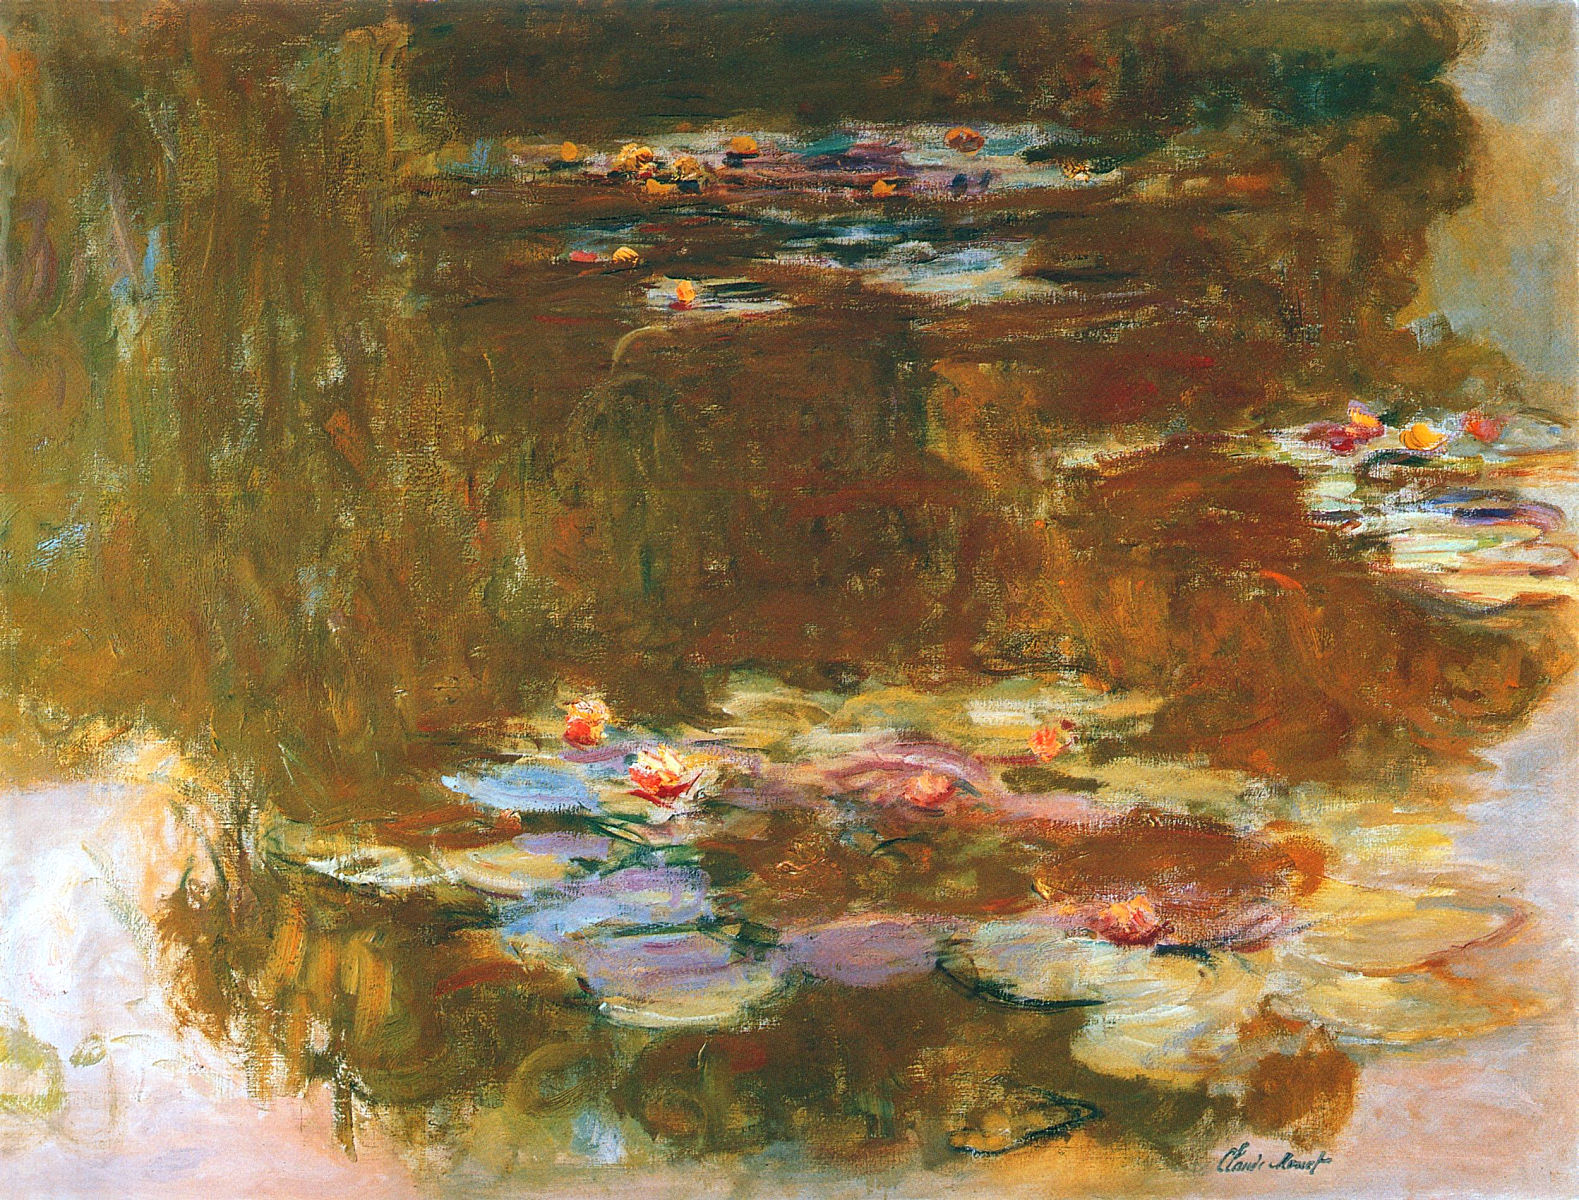 Claude+Monet-1840-1926 (1038).jpg